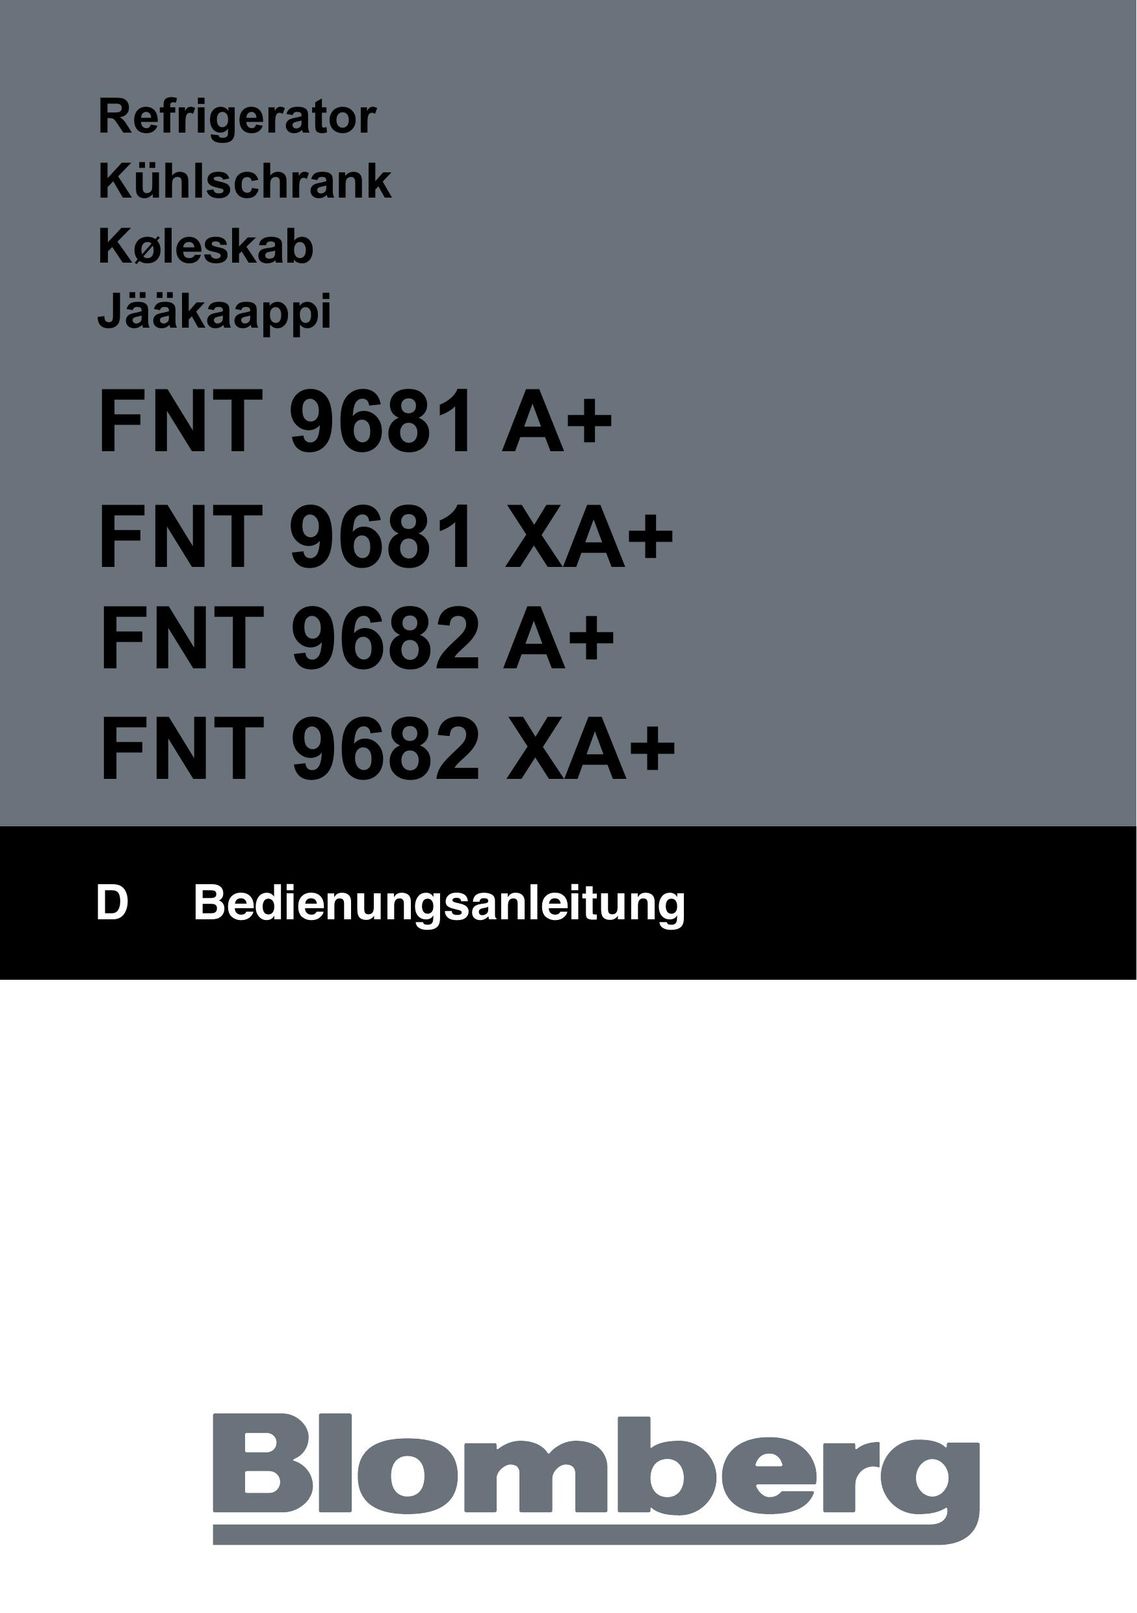 Blomberg FNT 9682 A+ Freezer User Manual